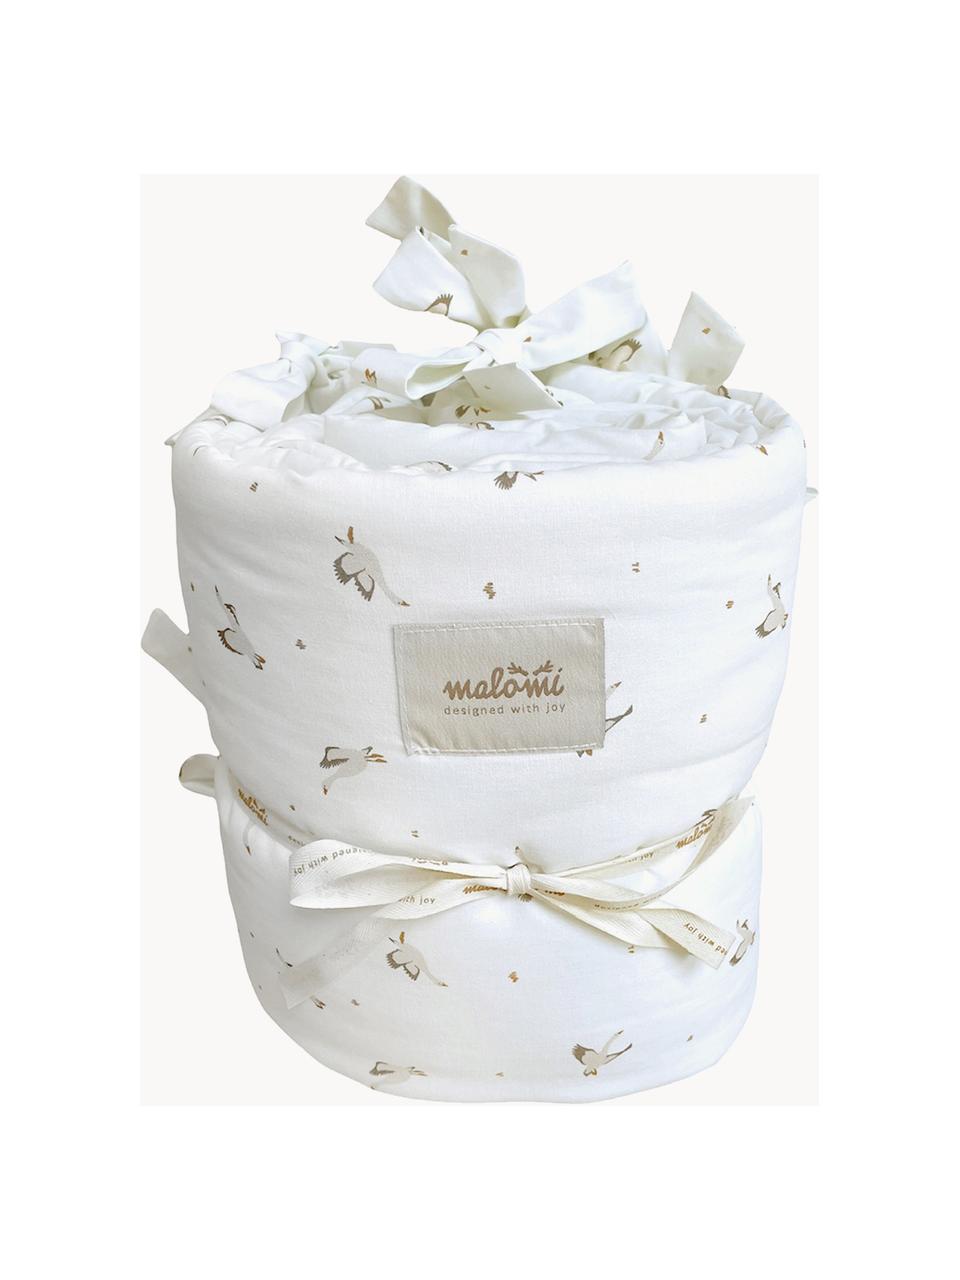 Chichonera cuna artesanal Comfort, Funda: 100% algodón Relleno, Blanco Off White, motivo de ganso, An 28 x L 120 cm